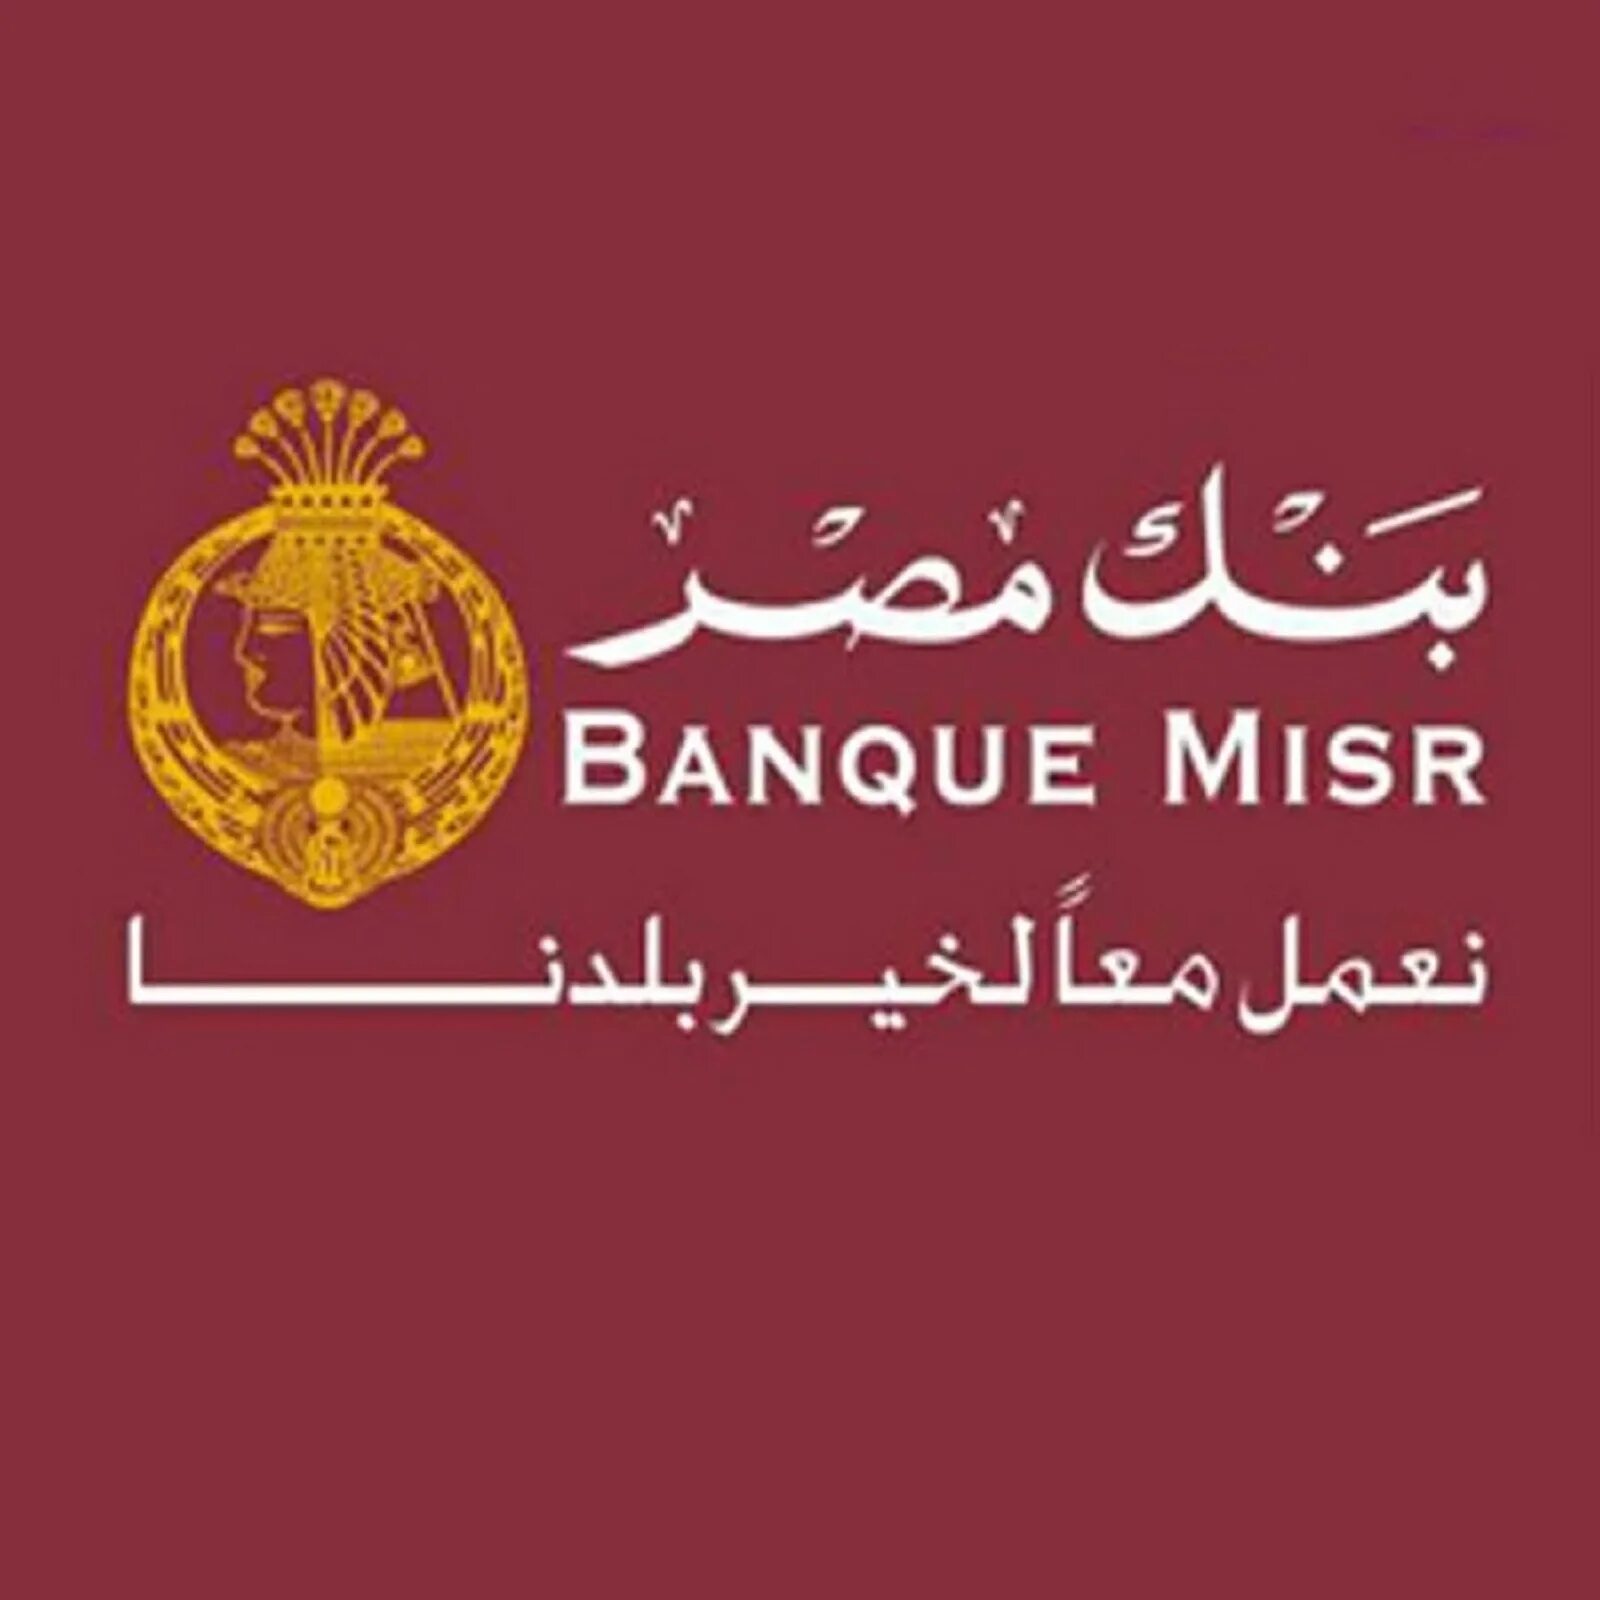 Bank misr. Банк Misr. Misr банк Египет. Banque Misr Letterhead. Banque Misr | p.o. Box 1502 |Deira | Dubai | UAE Страна.